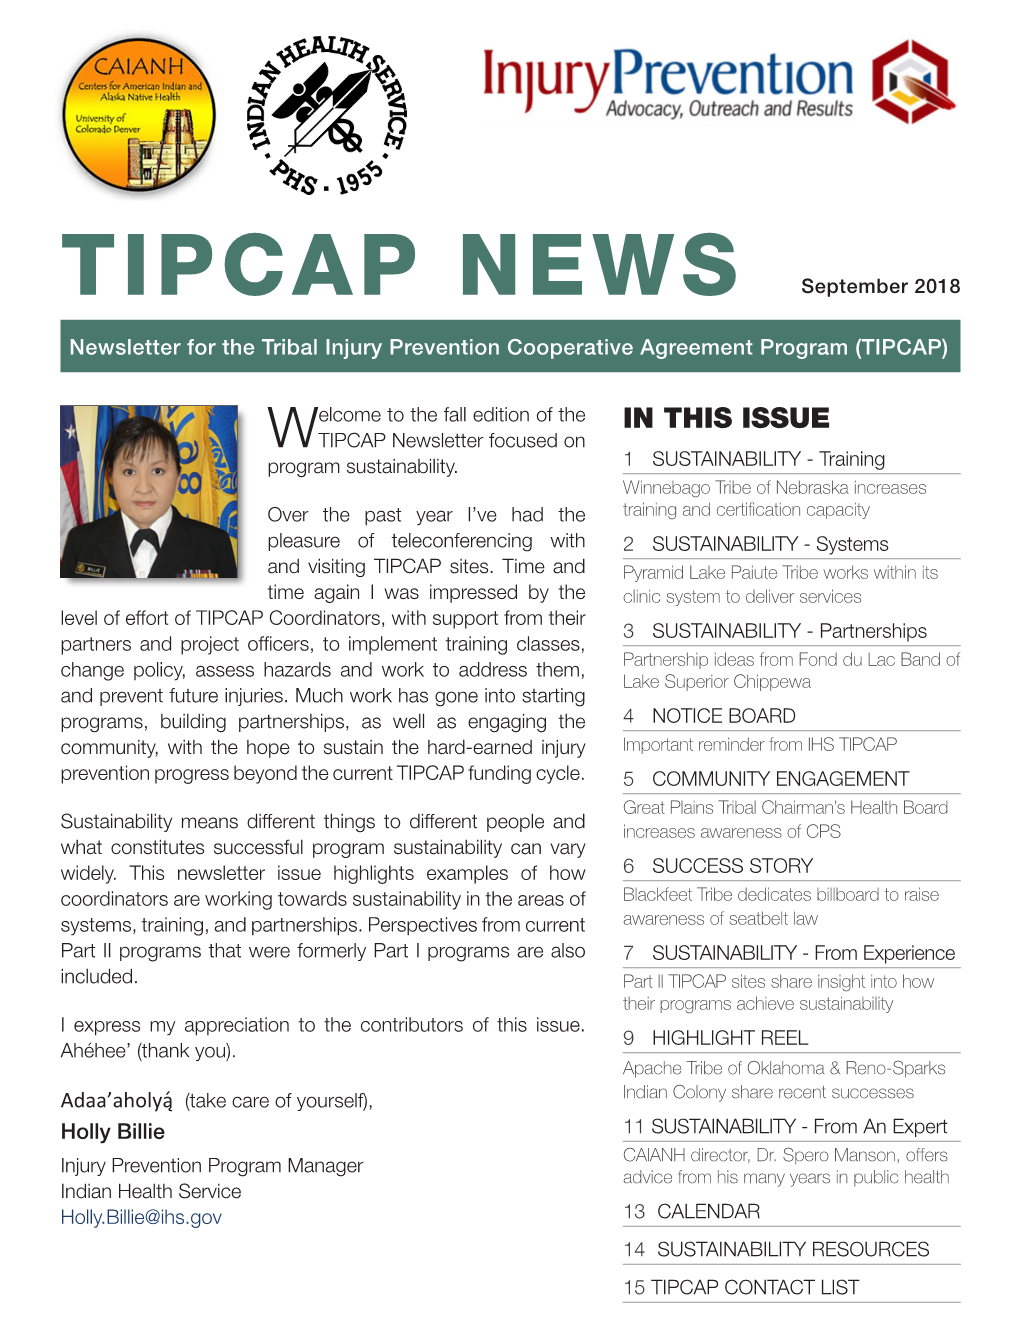 TIPCAP Newsletter Focused on Program Sustainability